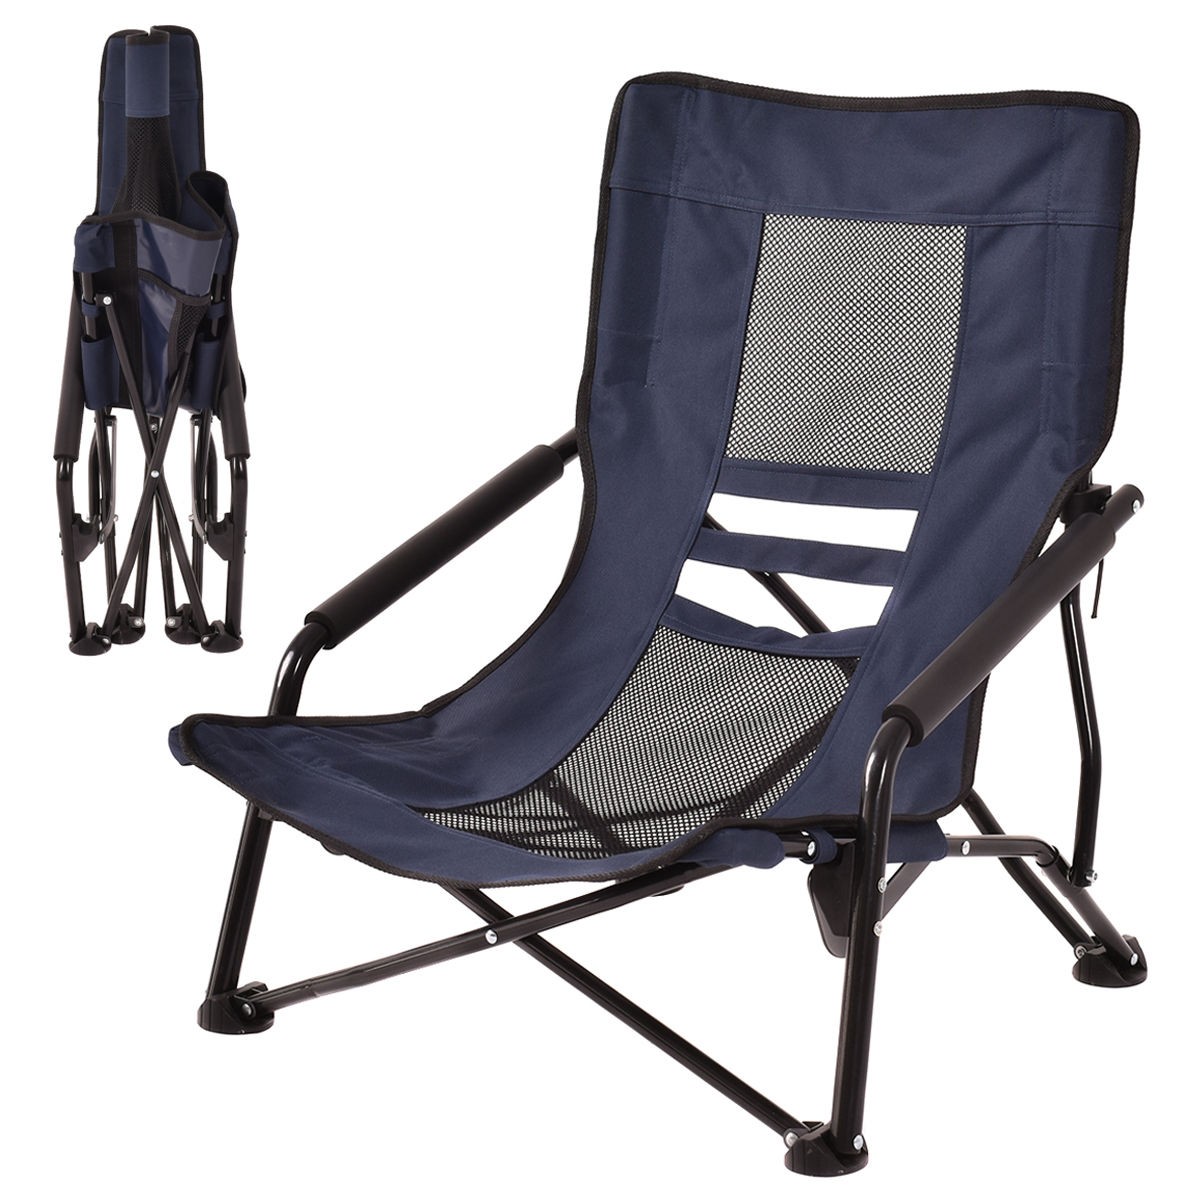 Outdoor High Back Folding Beach Chair